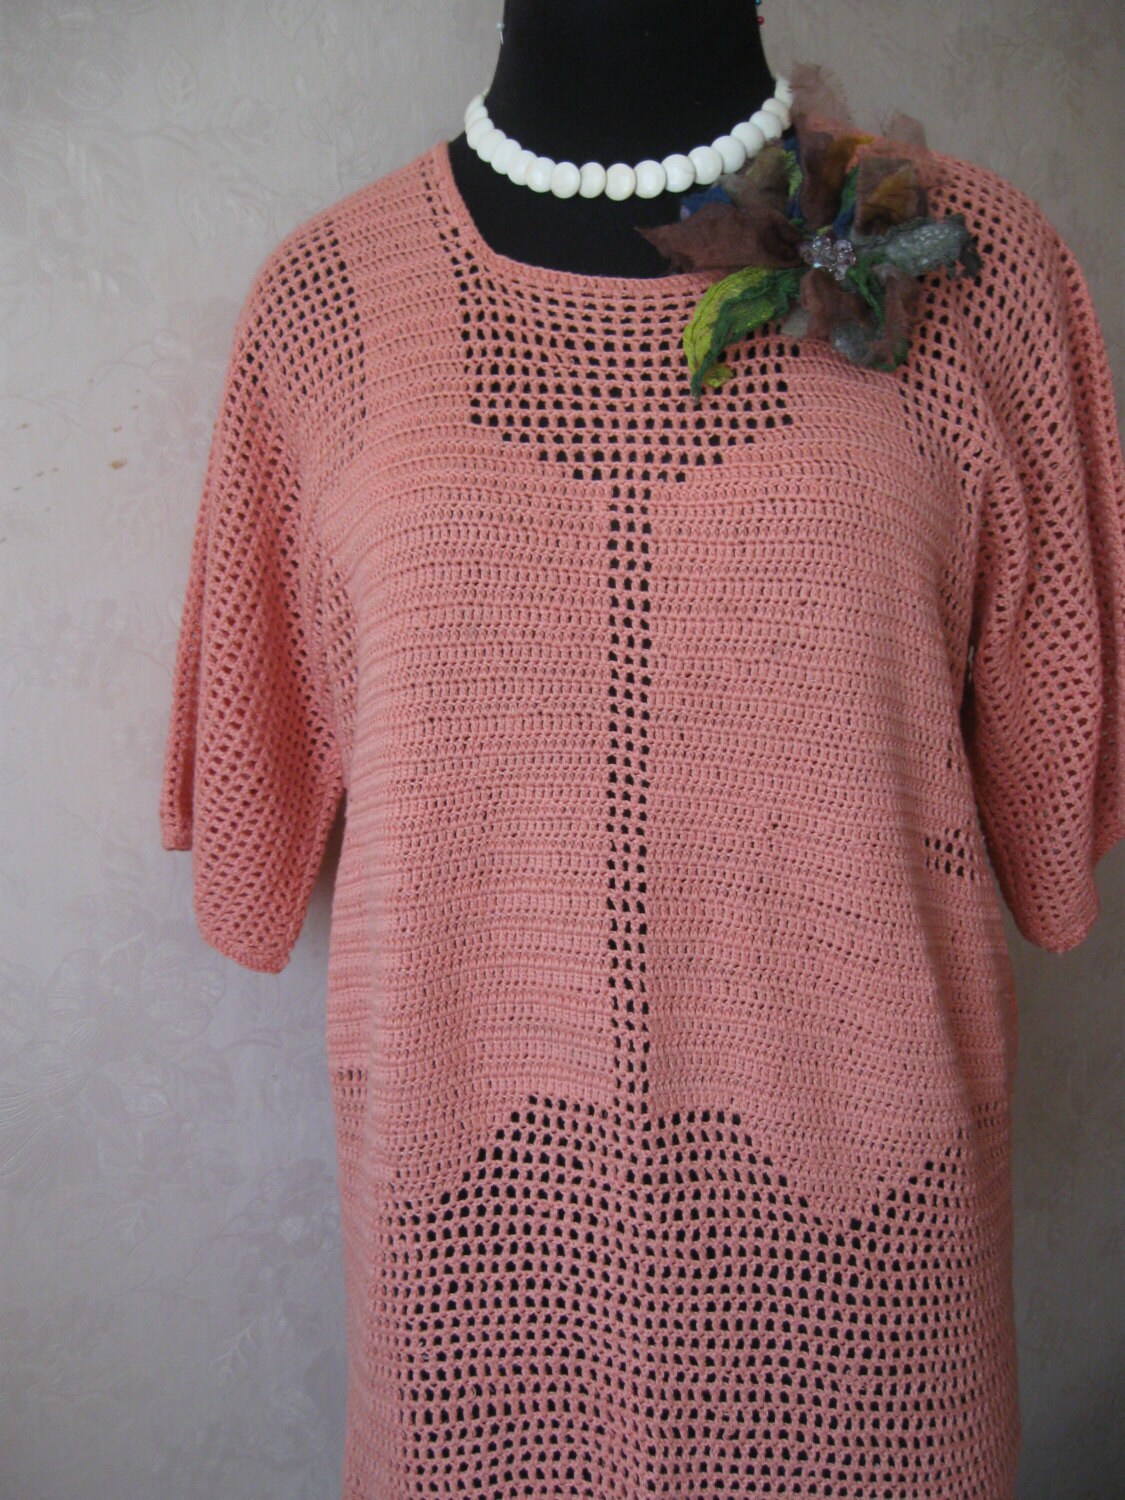 Handmade. Tunic Crochet. Cotton. Women's Tunic - Etsy